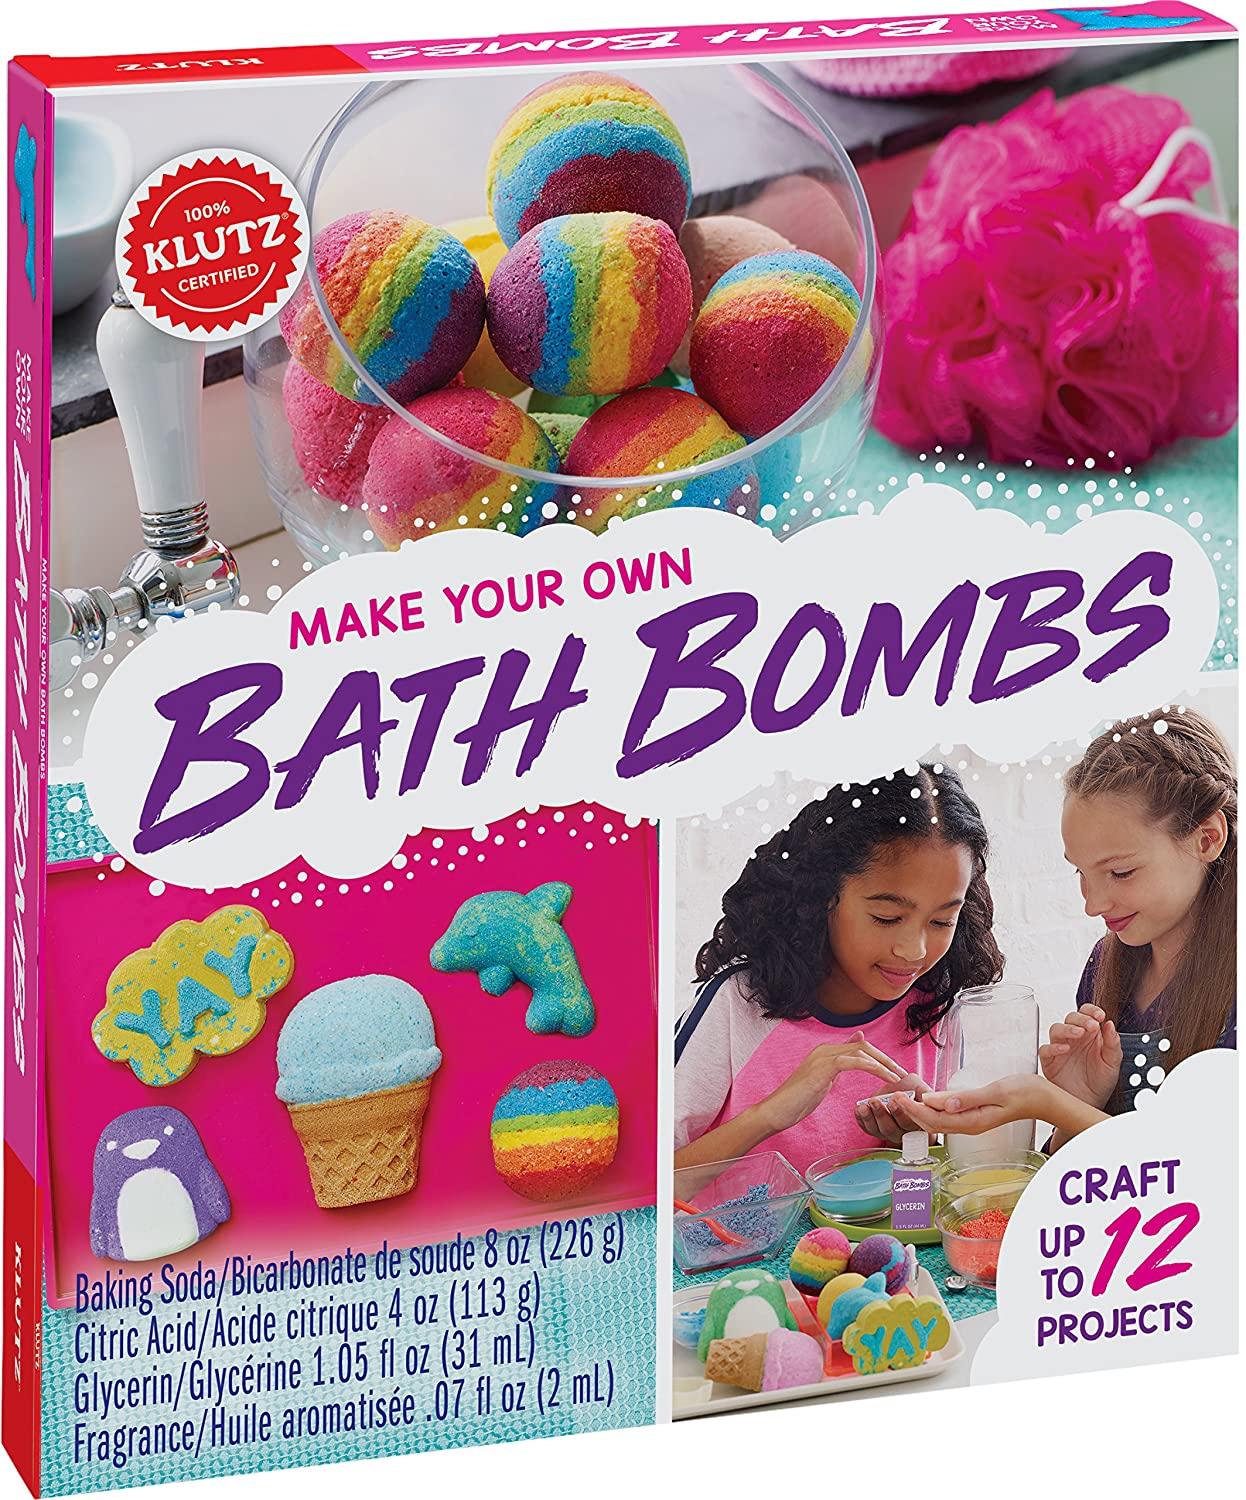 https://www.dontwasteyourmoney.com/wp-content/uploads/2020/07/klutz-make-your-own-bath-bombs-craft-kit-crafts-for-girls-8-12.jpg